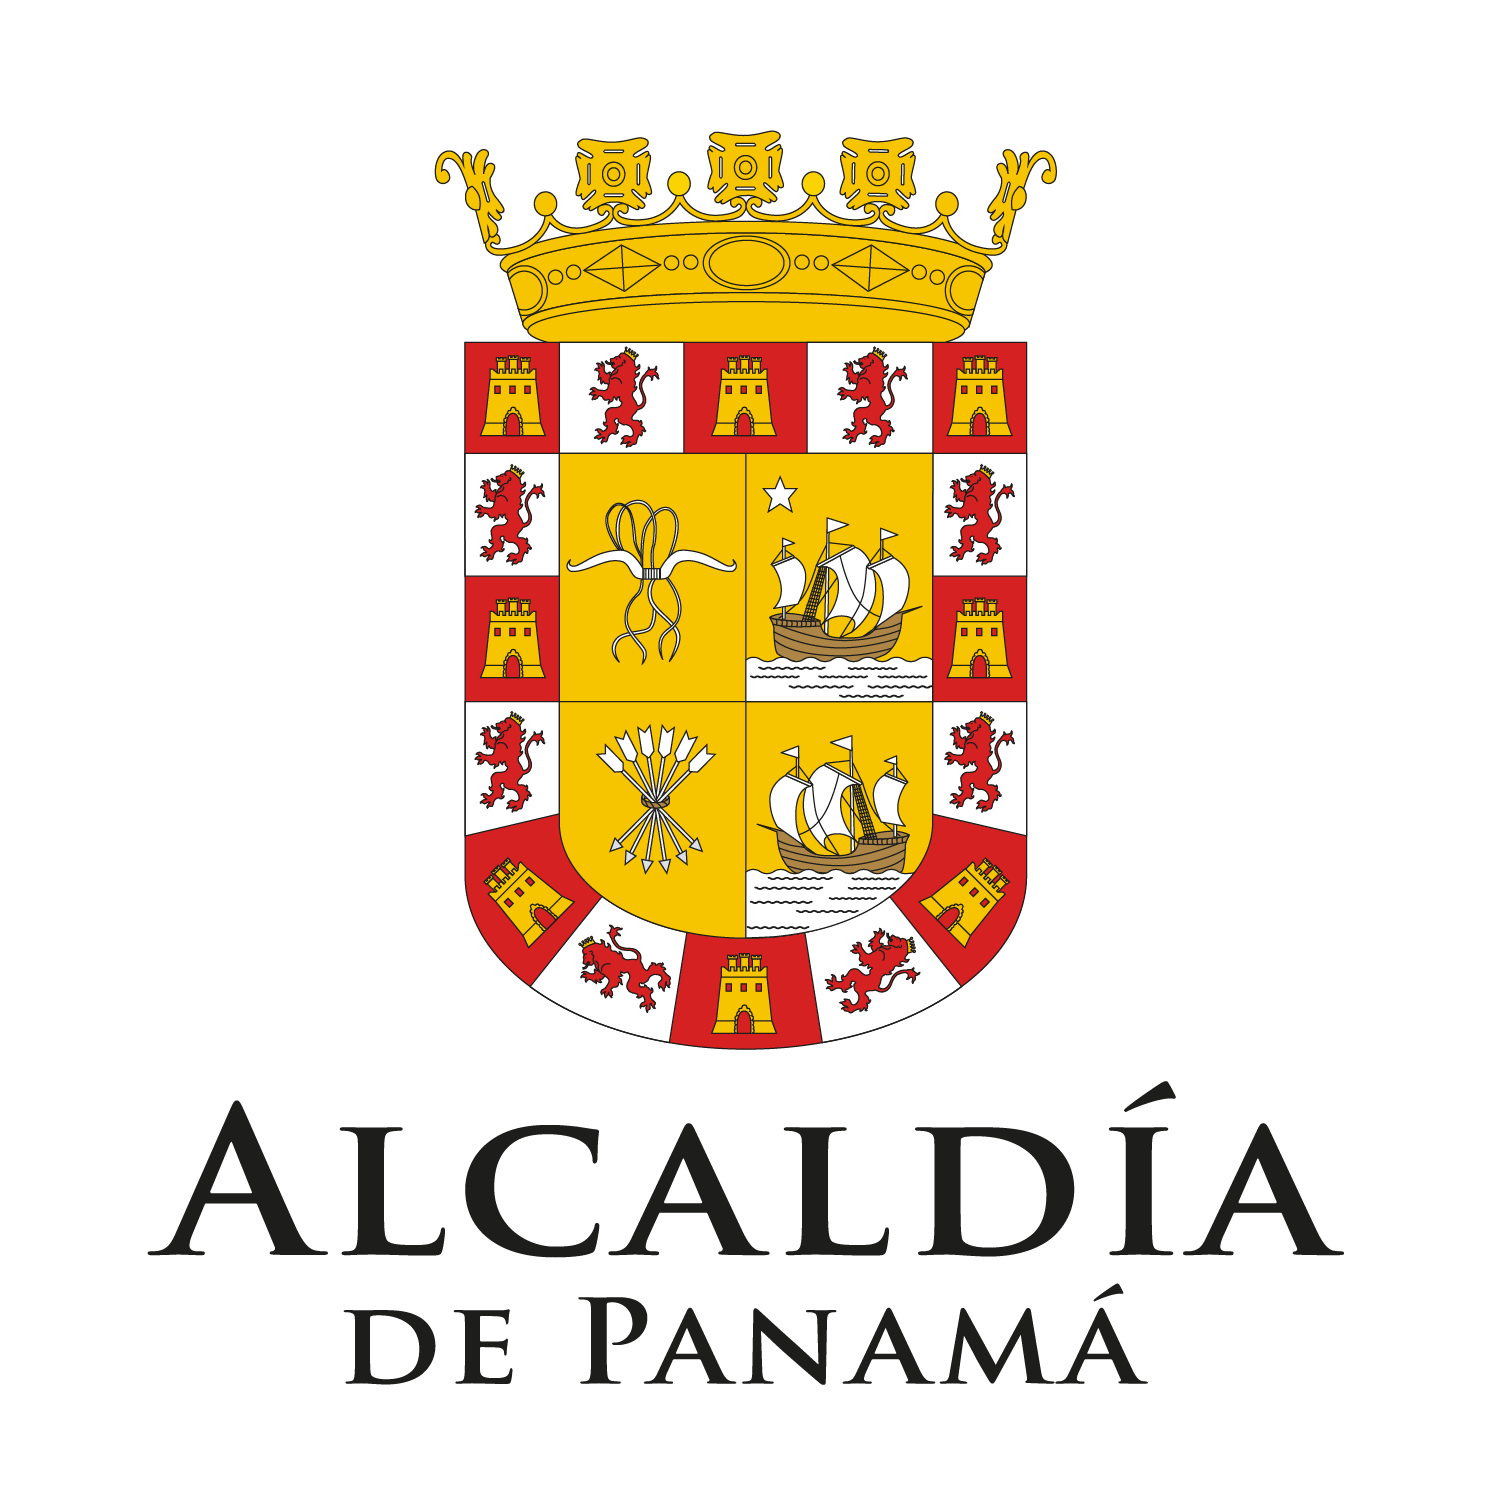 Alcandia de Panama